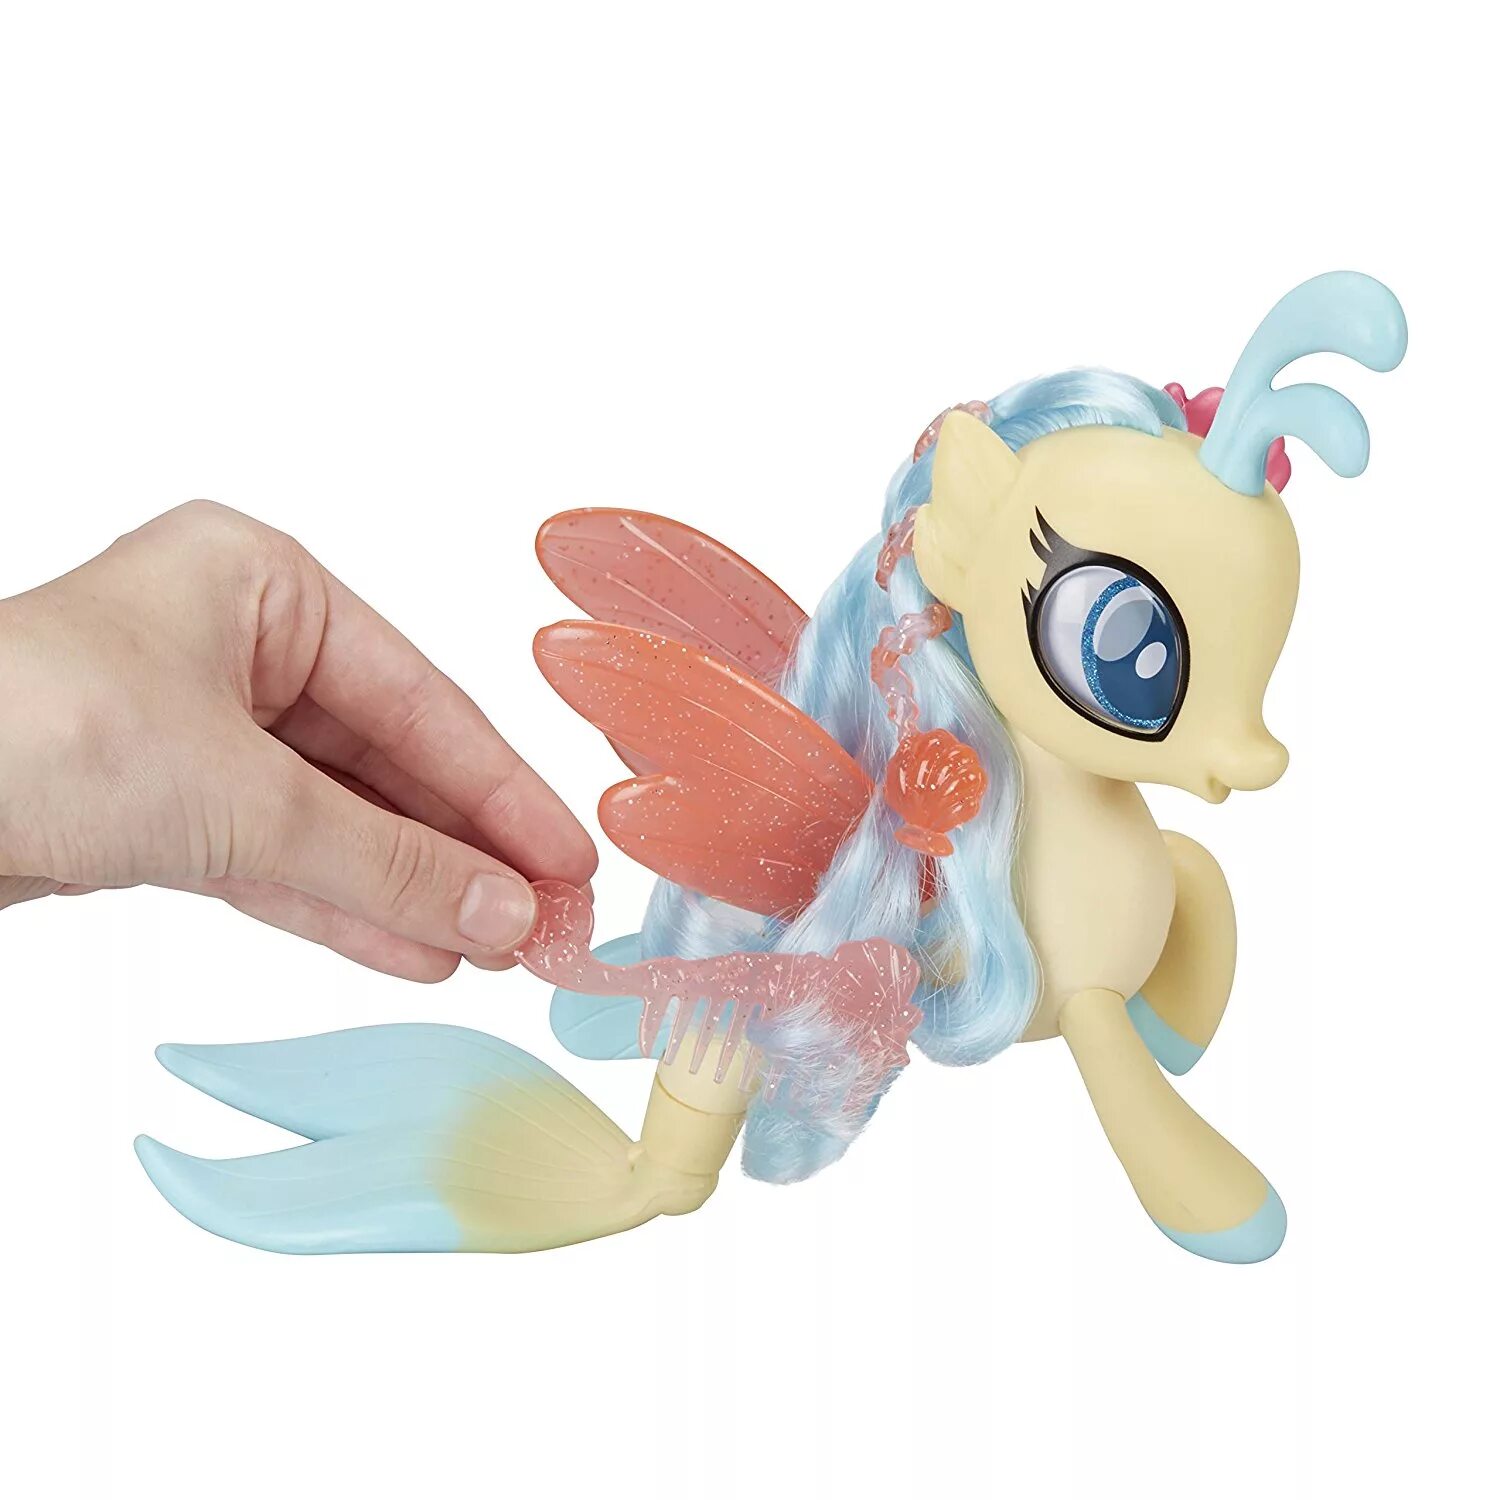 Новые игрушки литл пони. My little Pony Princess Skystar. Hasbro my little Pony c0683 пони-модница мерцание. Hasbro c0677. Игровой набор Hasbro принцесса Скайстар c1835.